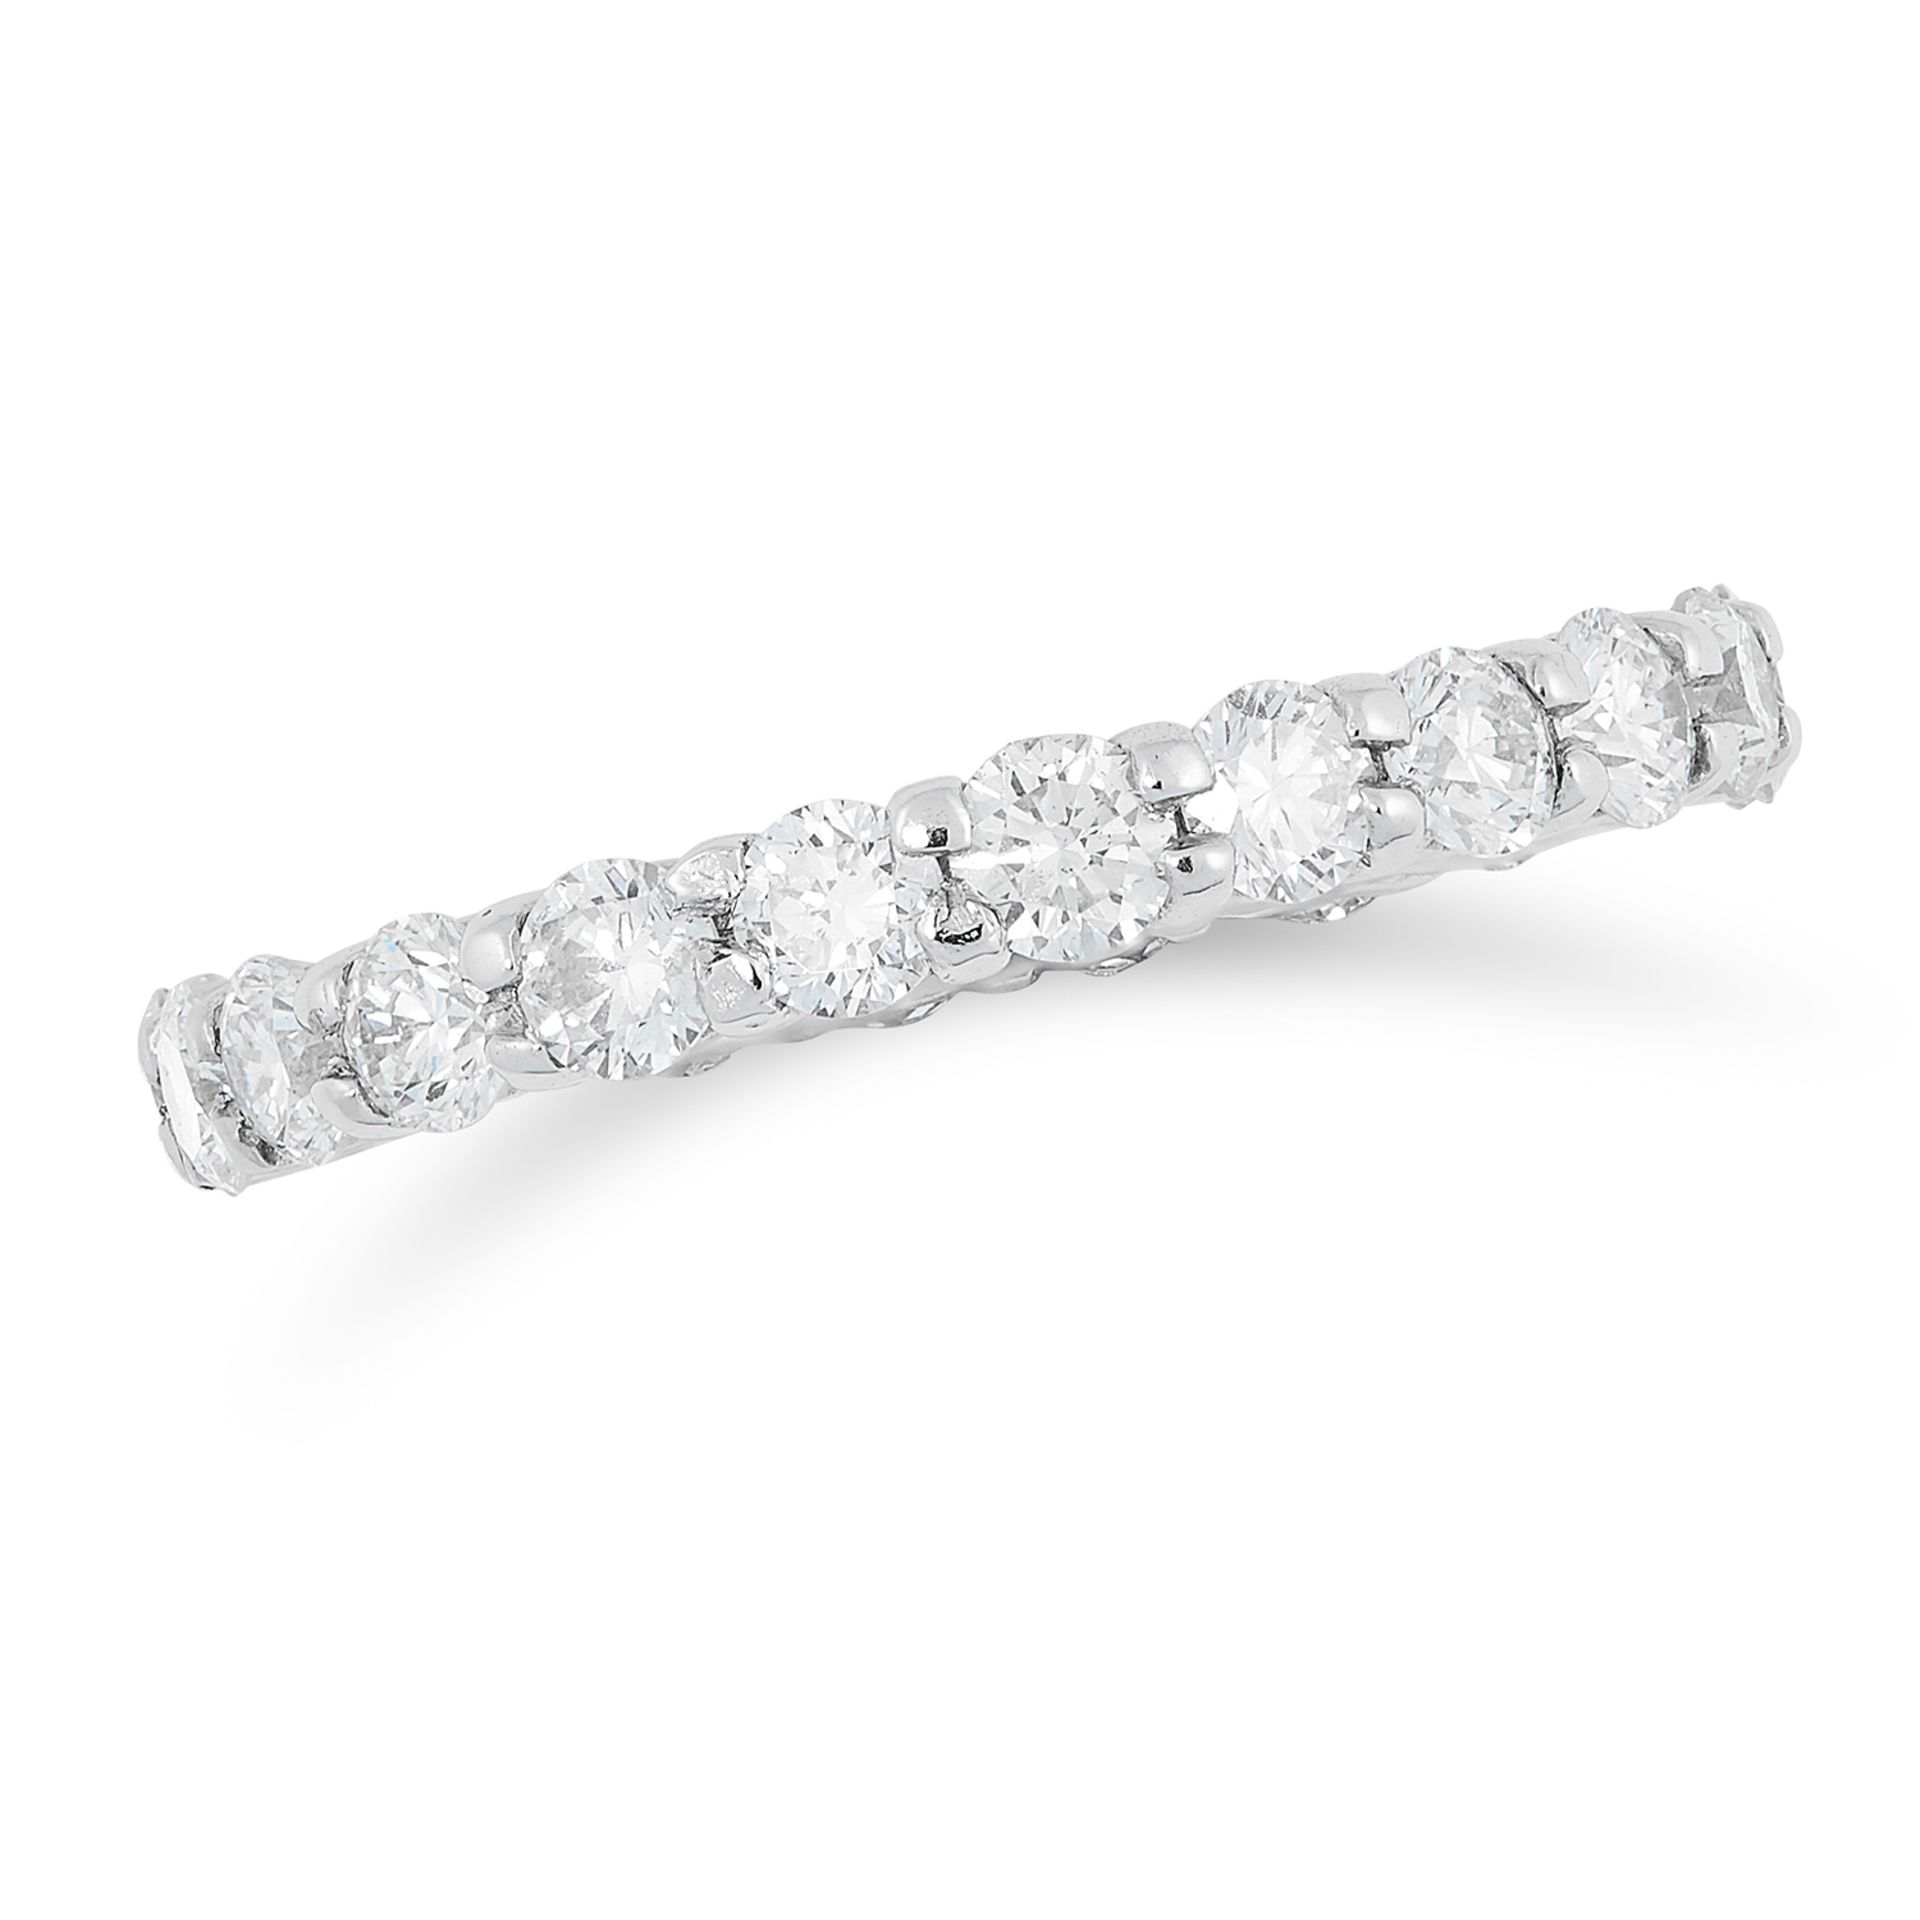 A DIAMOND ETERNITY RING the band set with round cut diamonds, size I / 4, 2.9g.